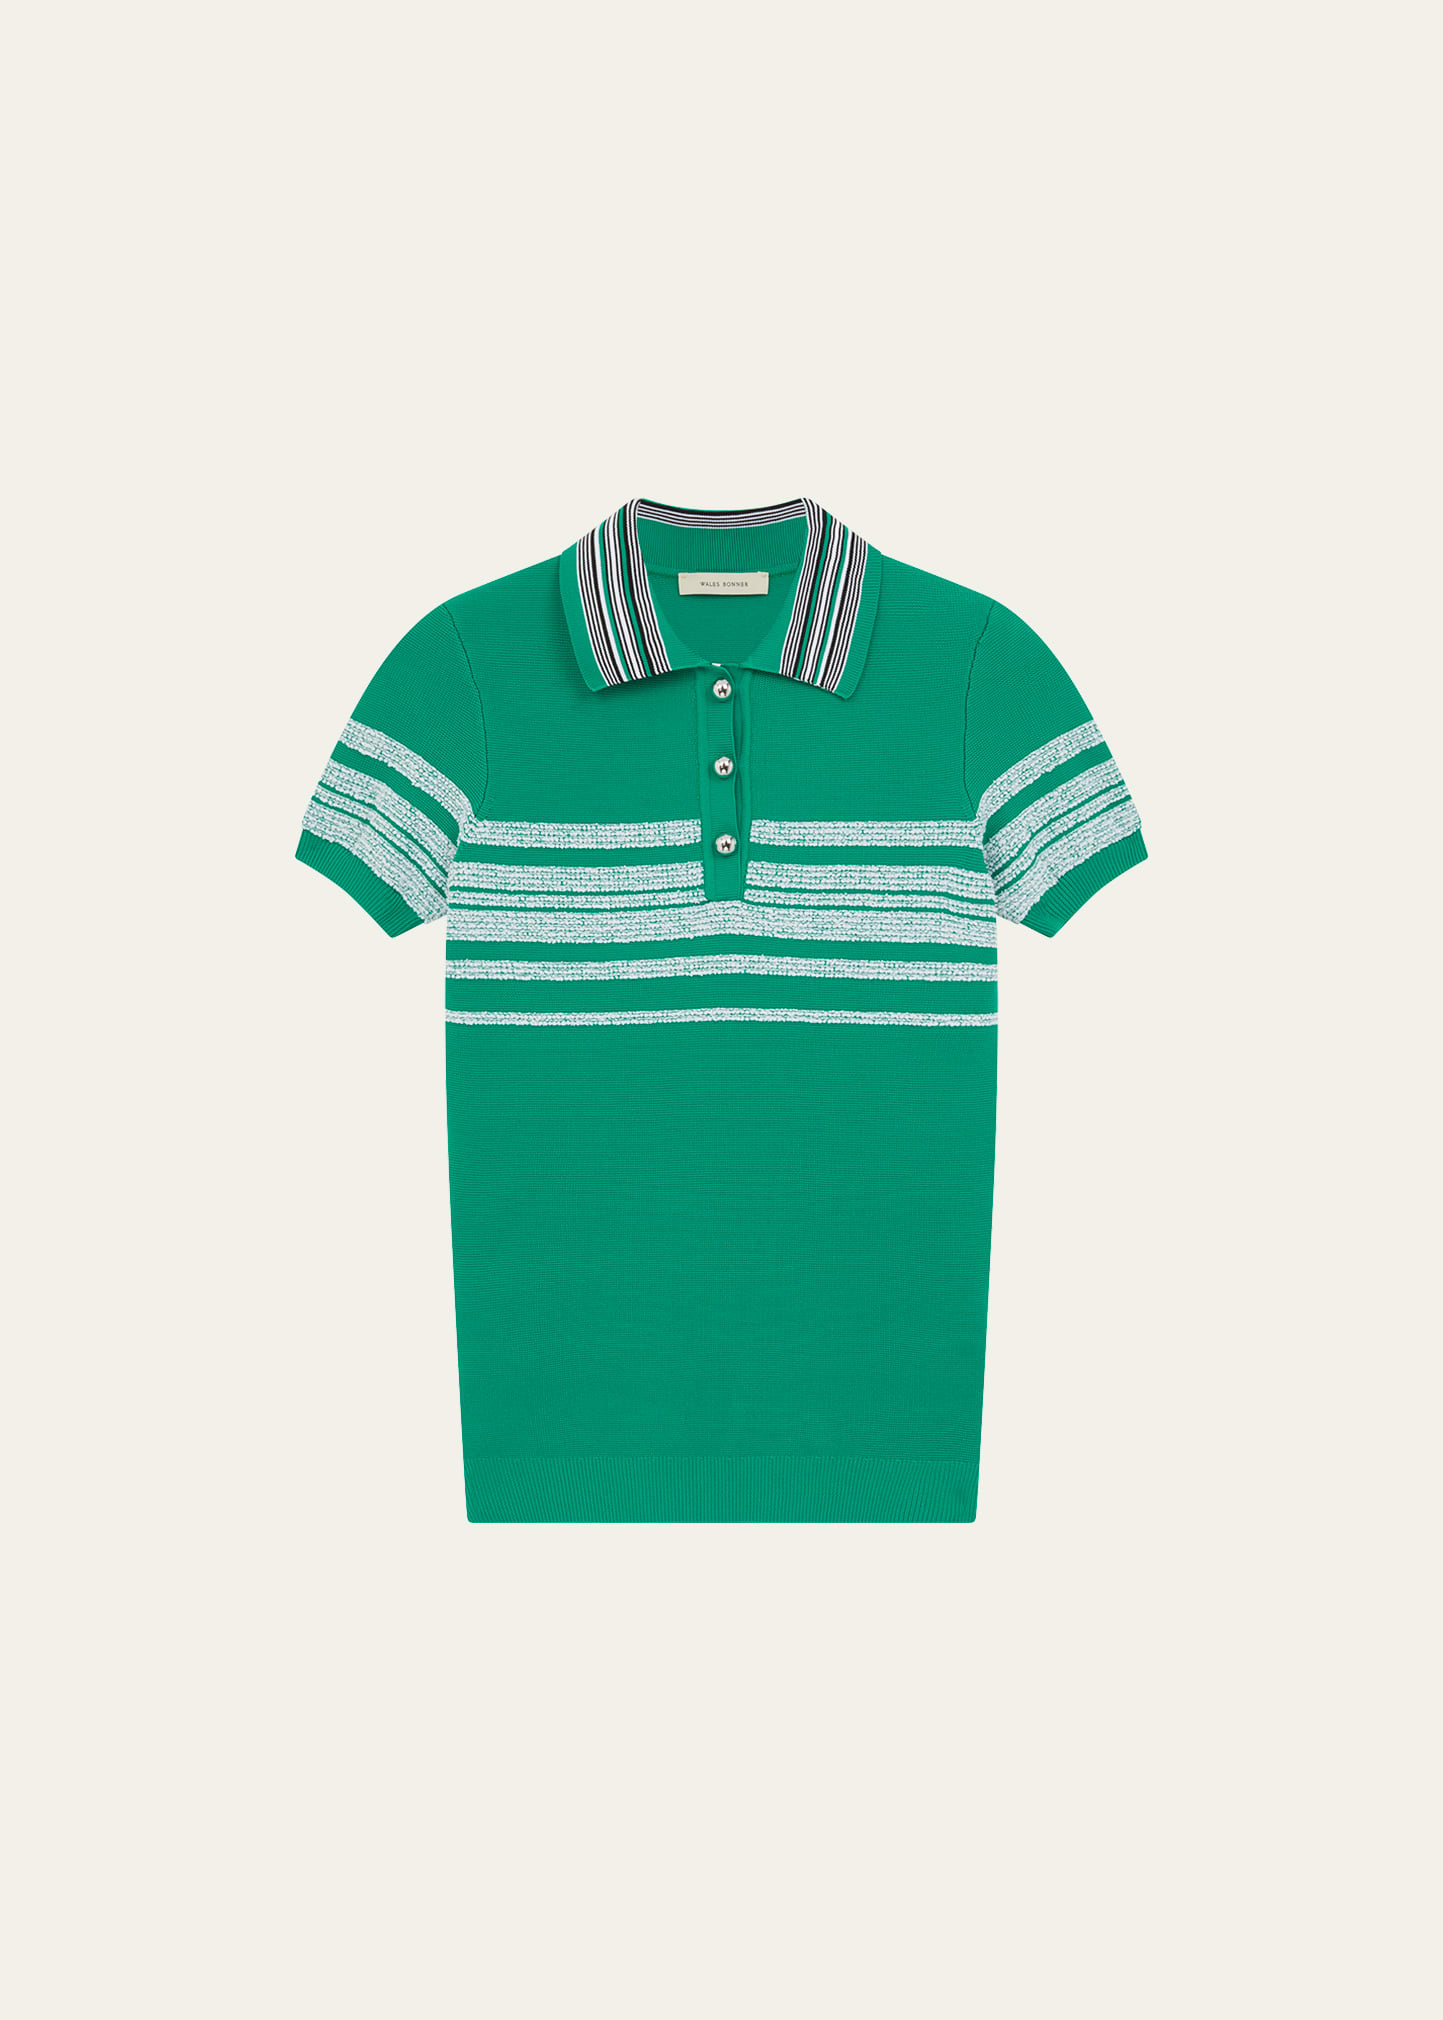 Wales Bonner Men's Stripe Knit Polo Shirt In Green Ivory